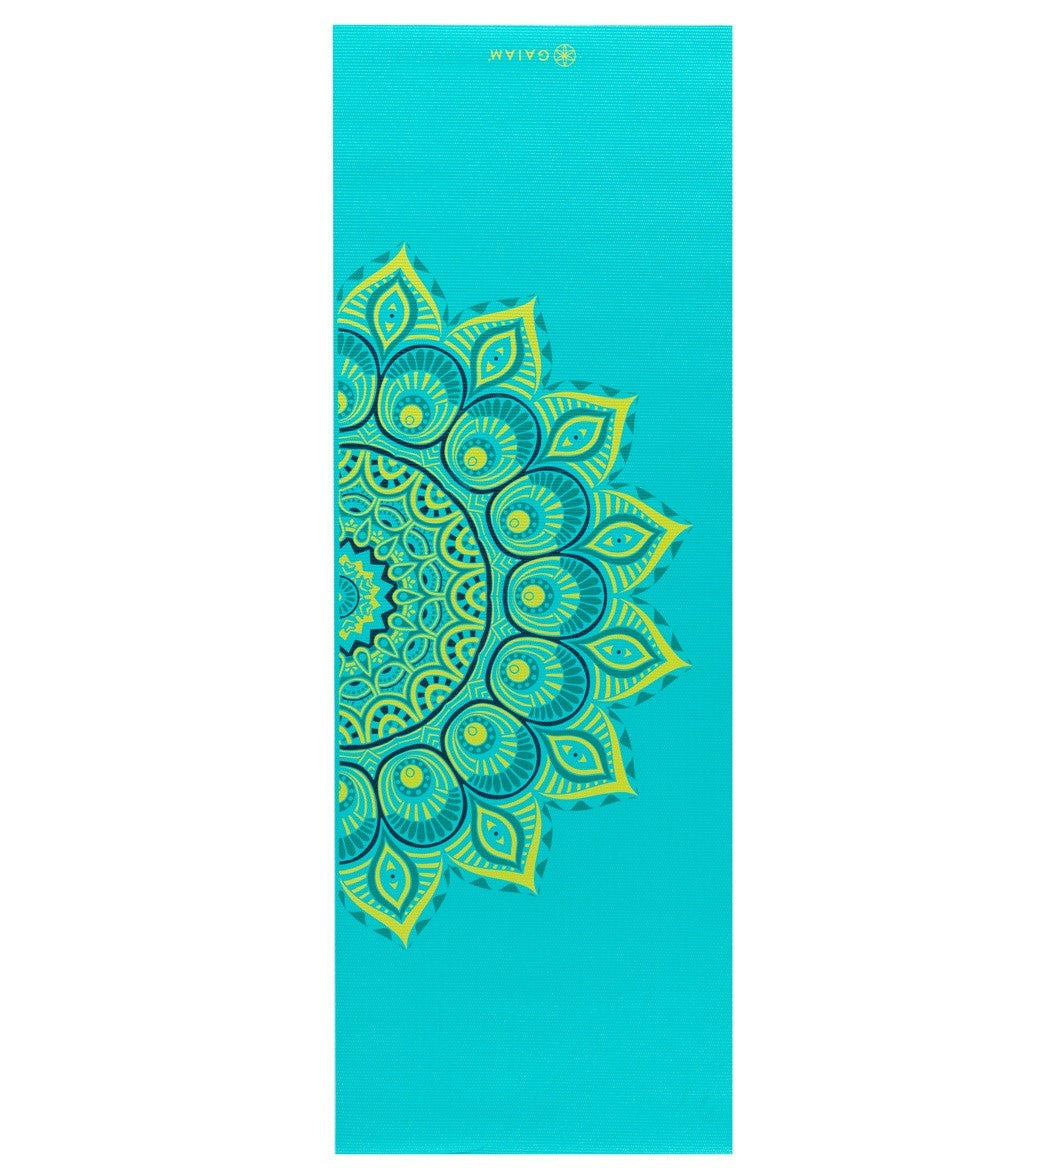 Gaiam Reversible Turquoise Lotus Printed Yoga Mat 68 6mm Extra